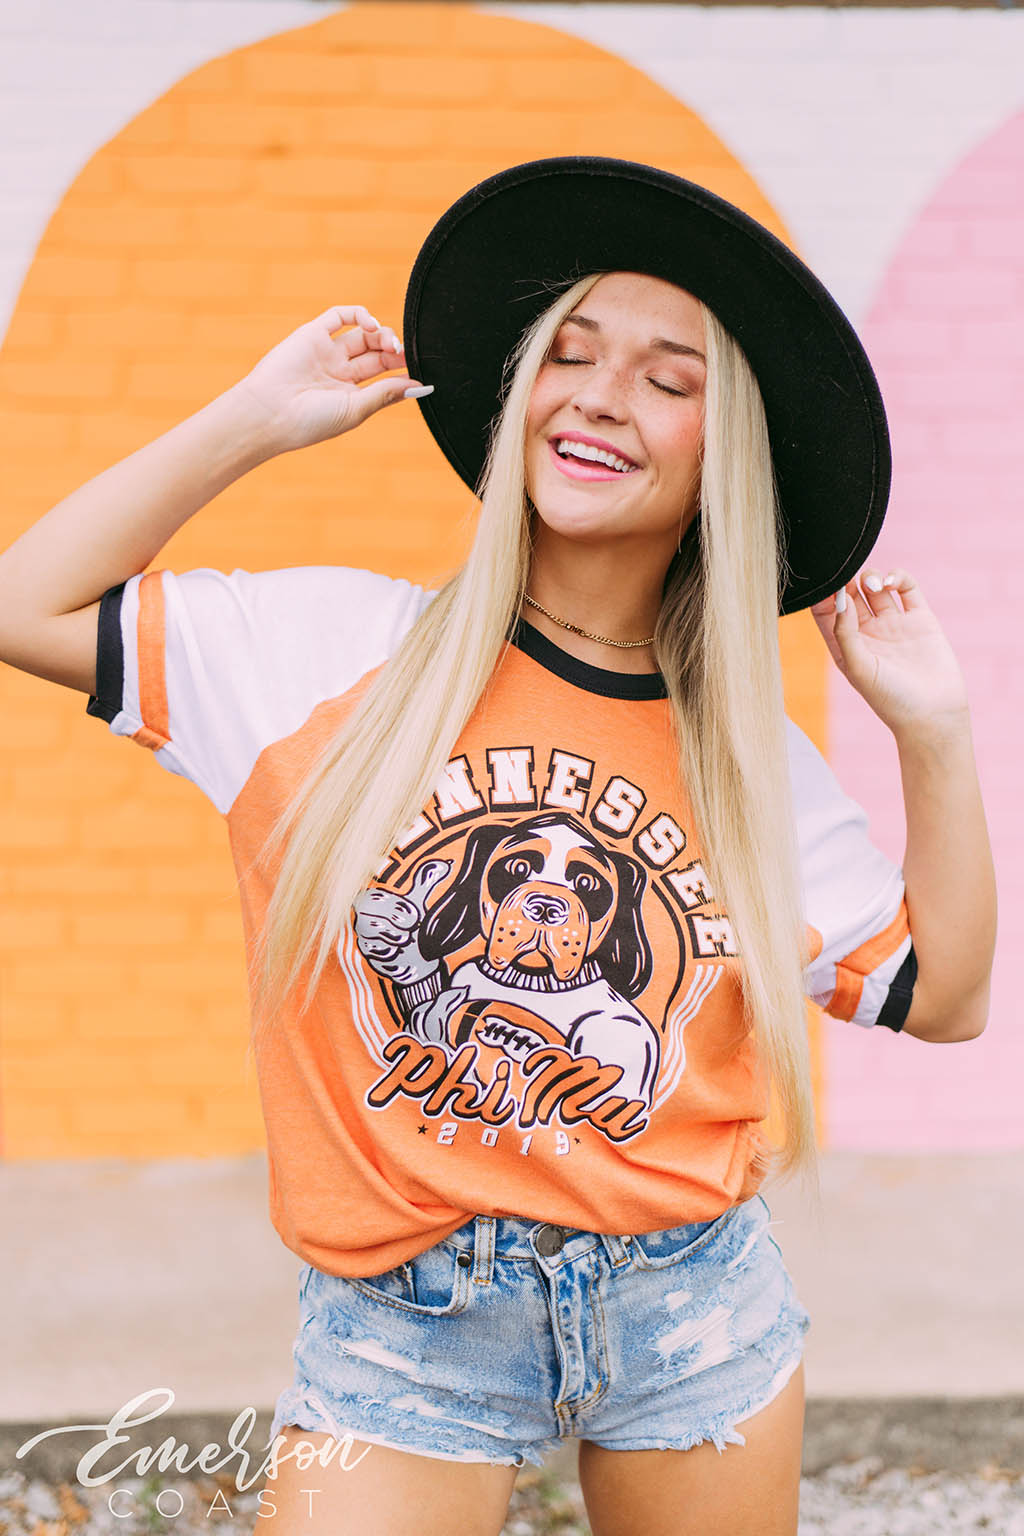 Tennessee Baseball Cartoon T-Shirt in Orange